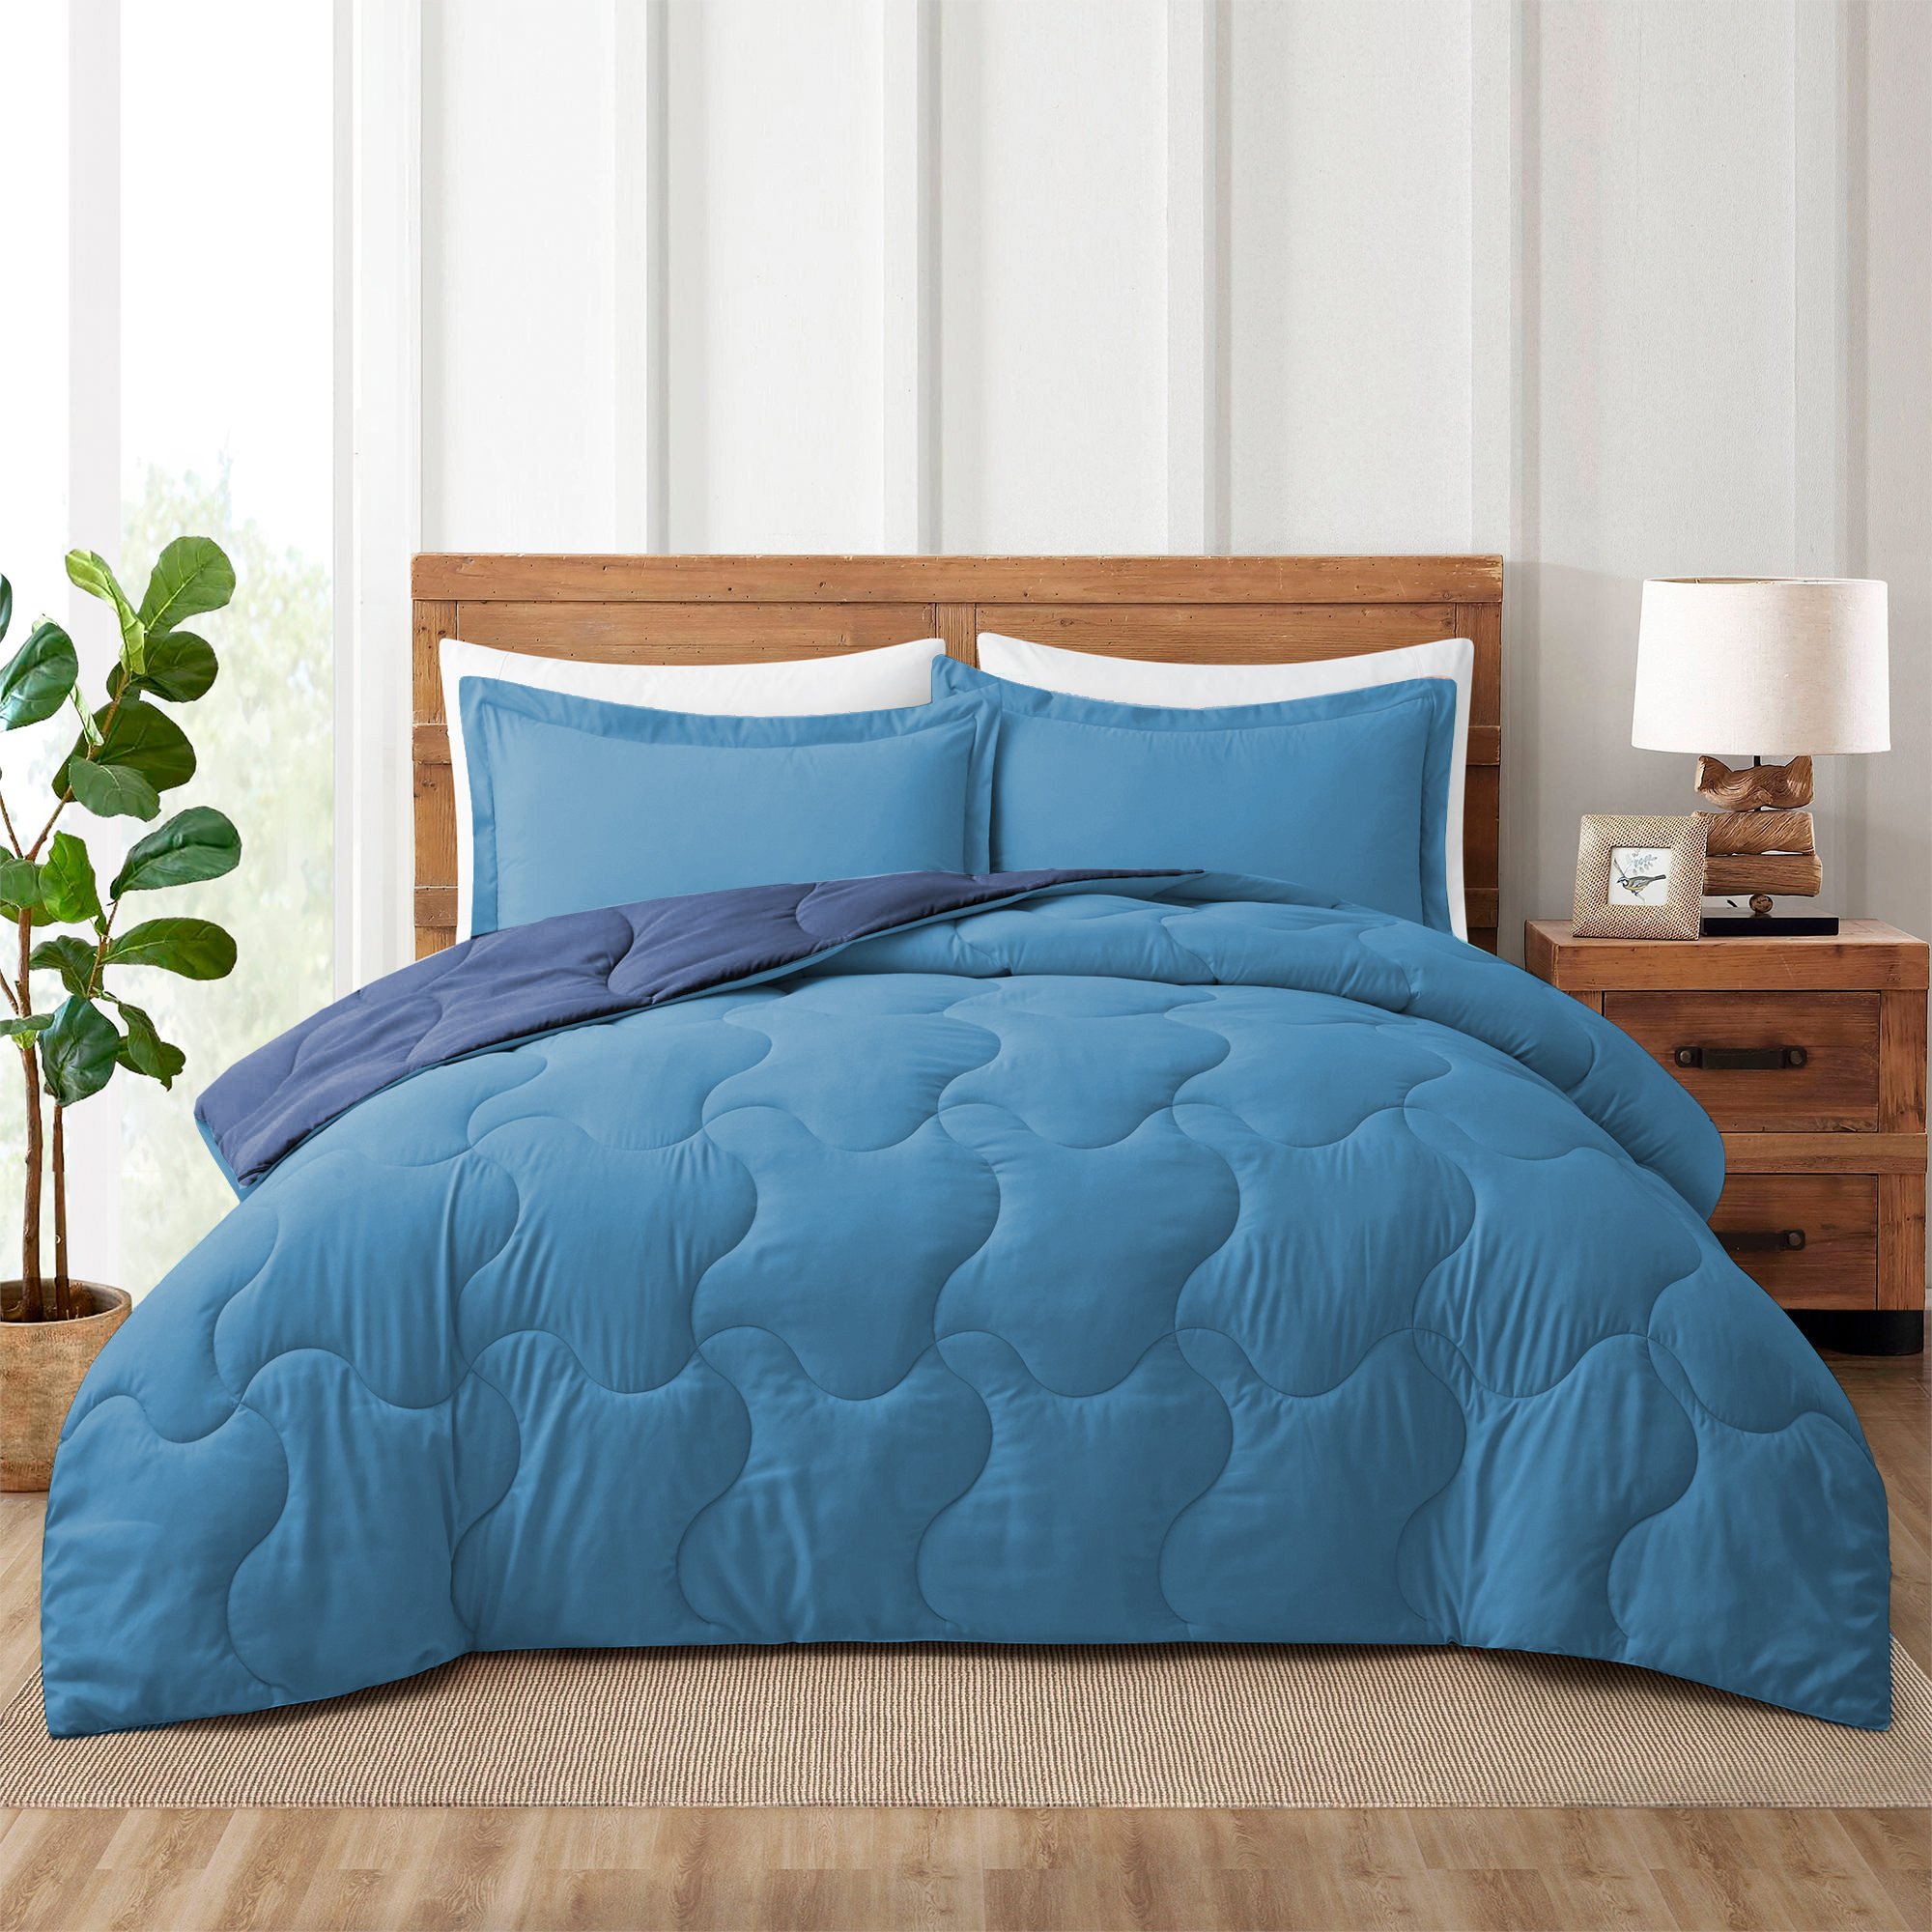 Lightweight Soft Quilted Down Alternative Comforter Reversible Duvet Insert With Corner Tabs - Full/Queen Size